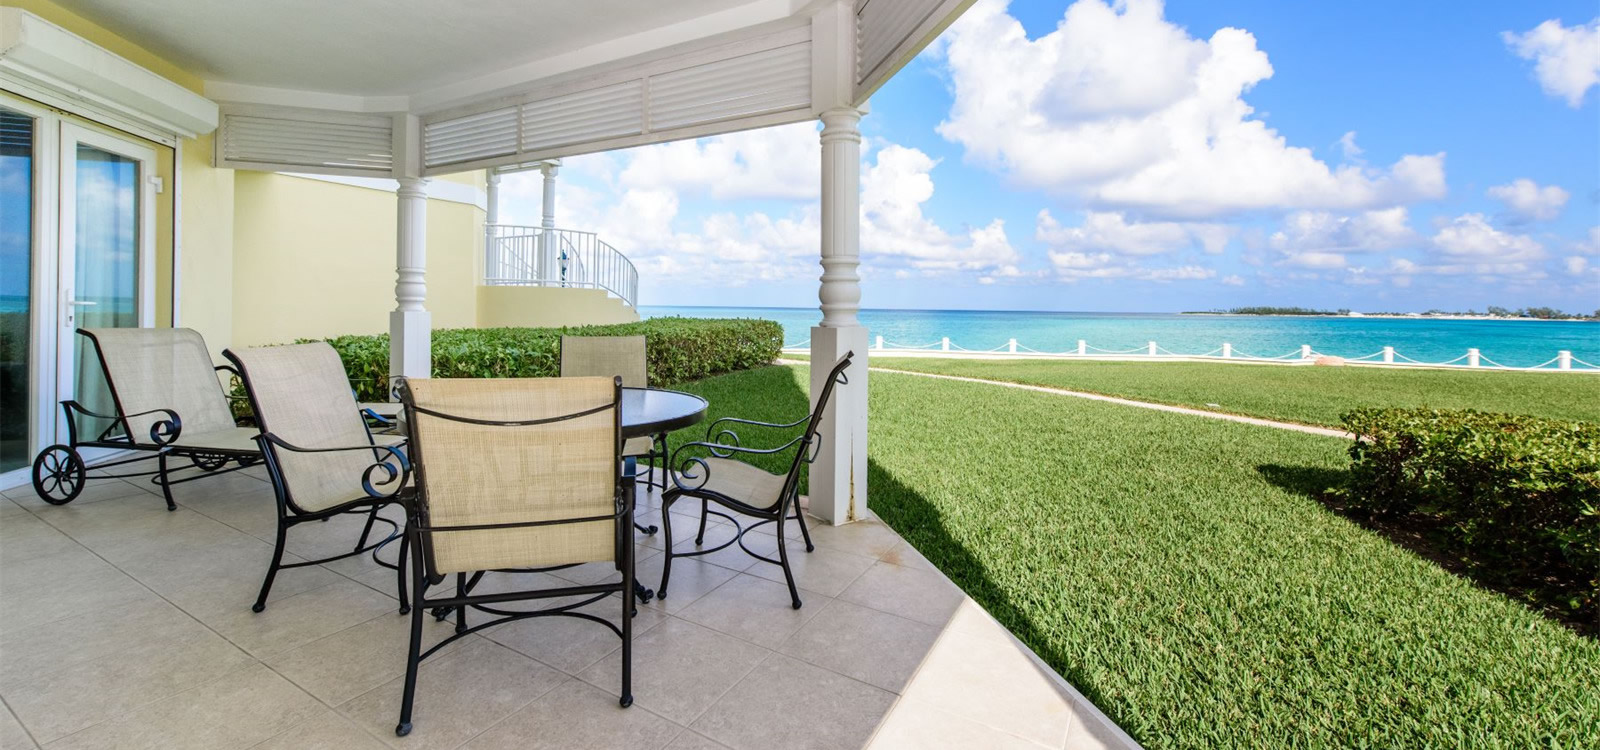 3 Bedroom Beachfront Condo For Sale Cable Beach Nassau Bahamas 7th Heaven Properties 9672